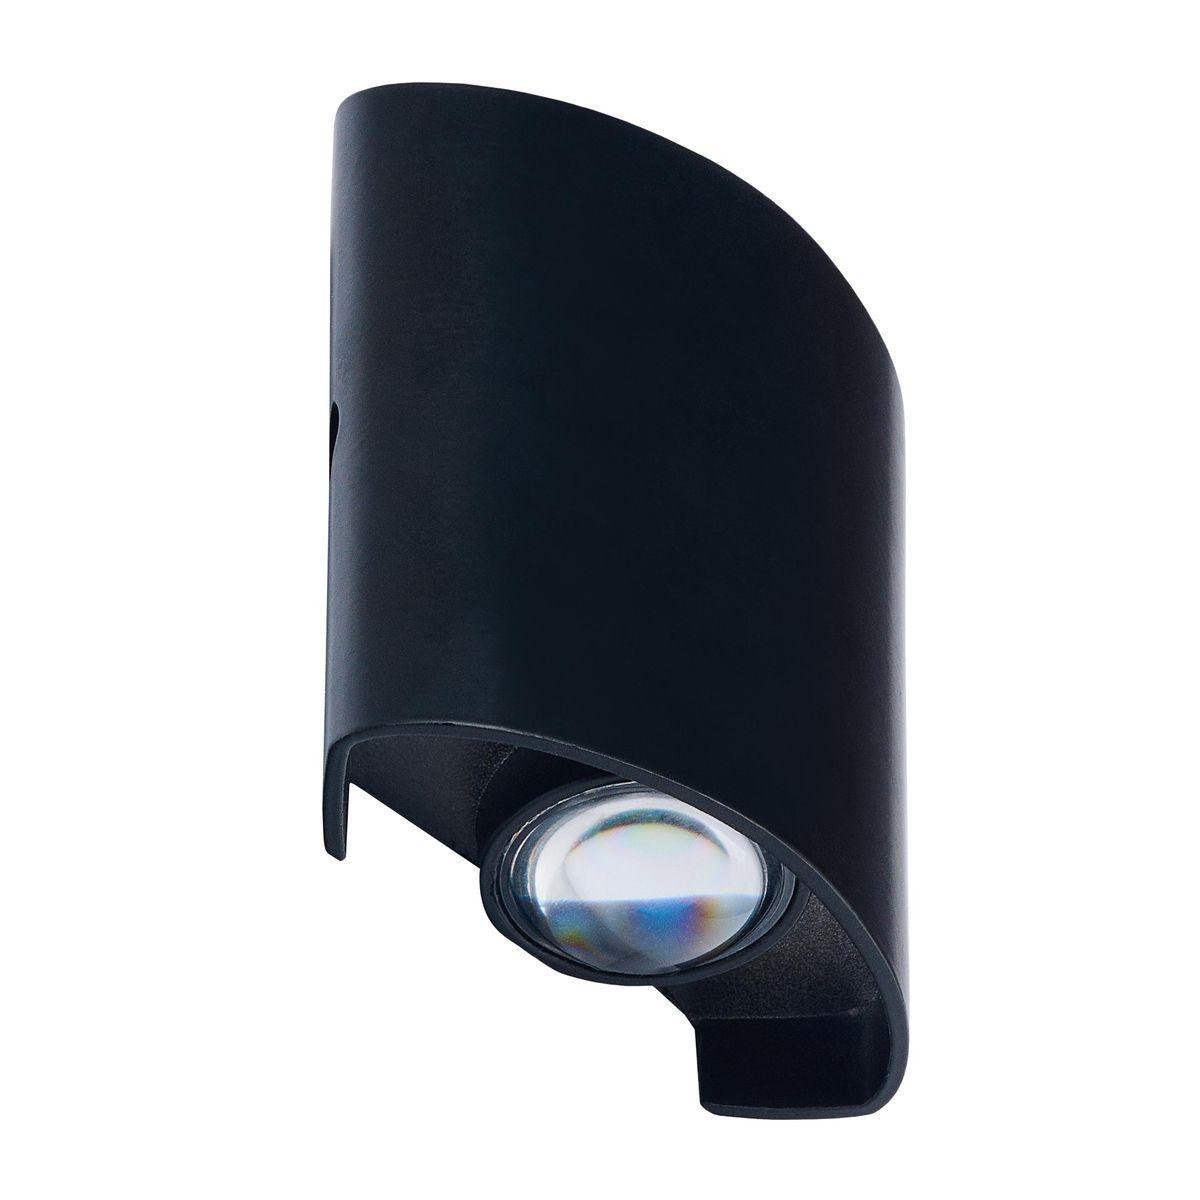 Настенный светодиодный светильник IMEX Cross IL.0014.0001-2 BK насос циркуляционный stout spc 0001 3260180 32 60 180 14 4 м³ ч монтаж 2 95 вт